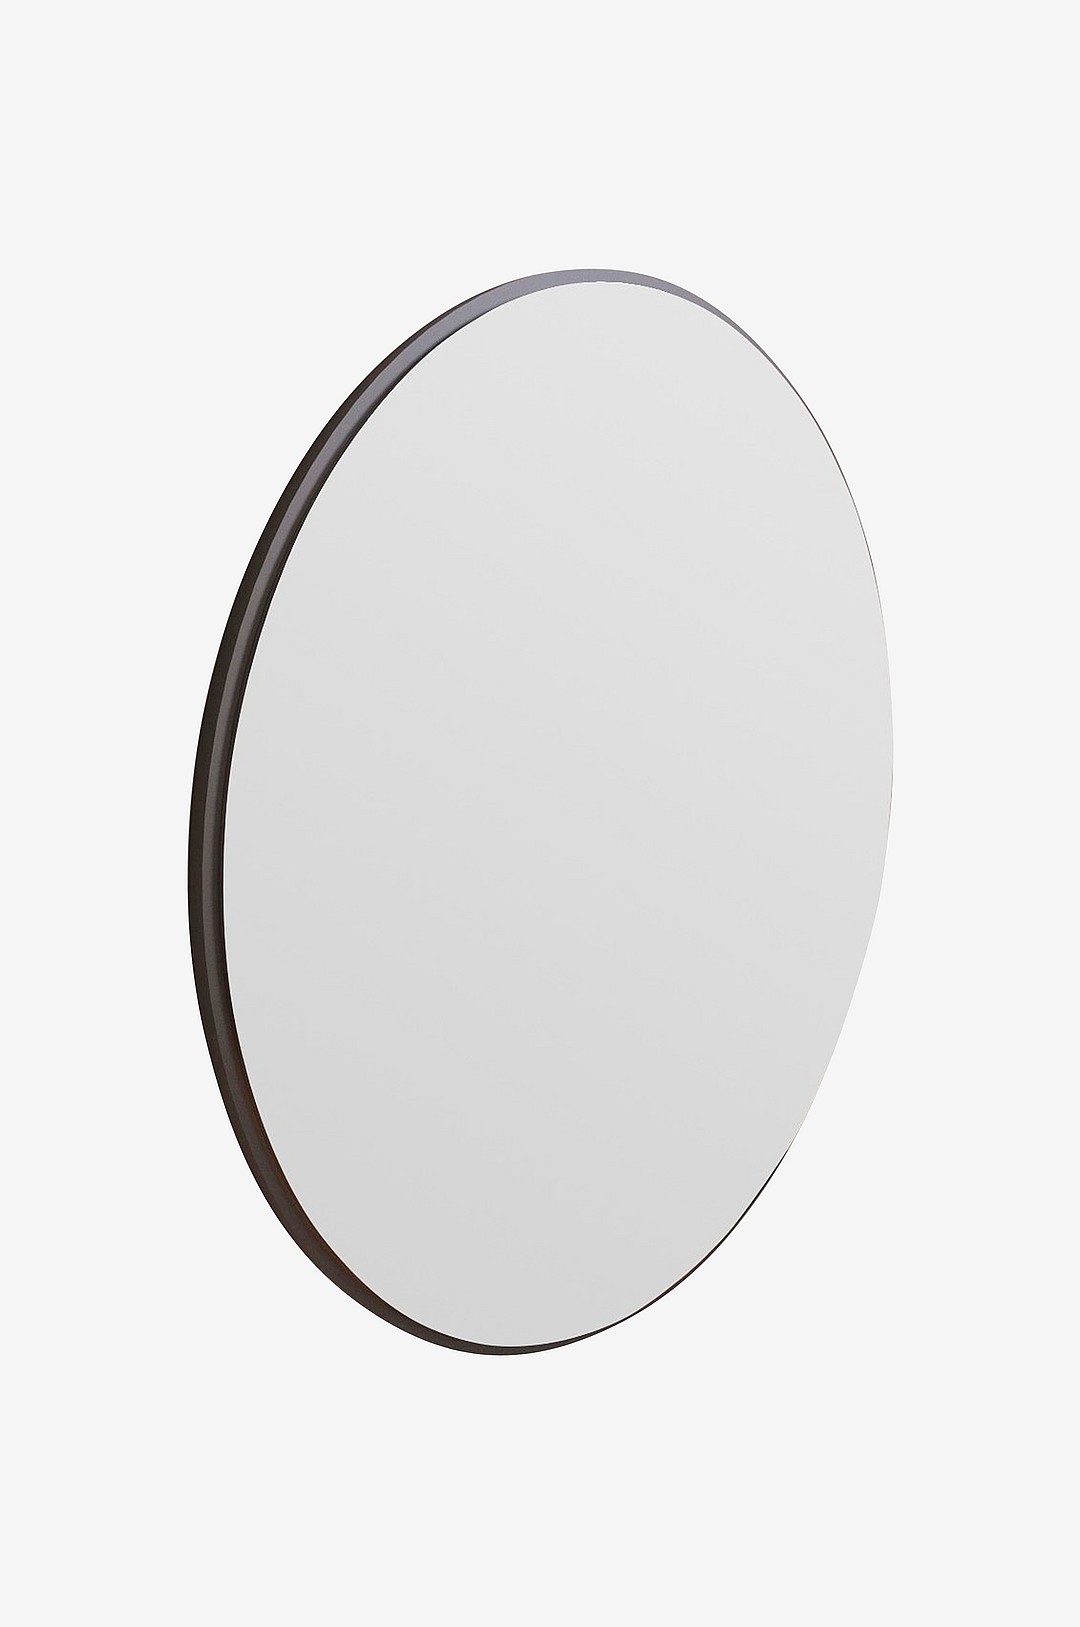 Homitis - Spegel Ozze 60 x 60 cm - Svart